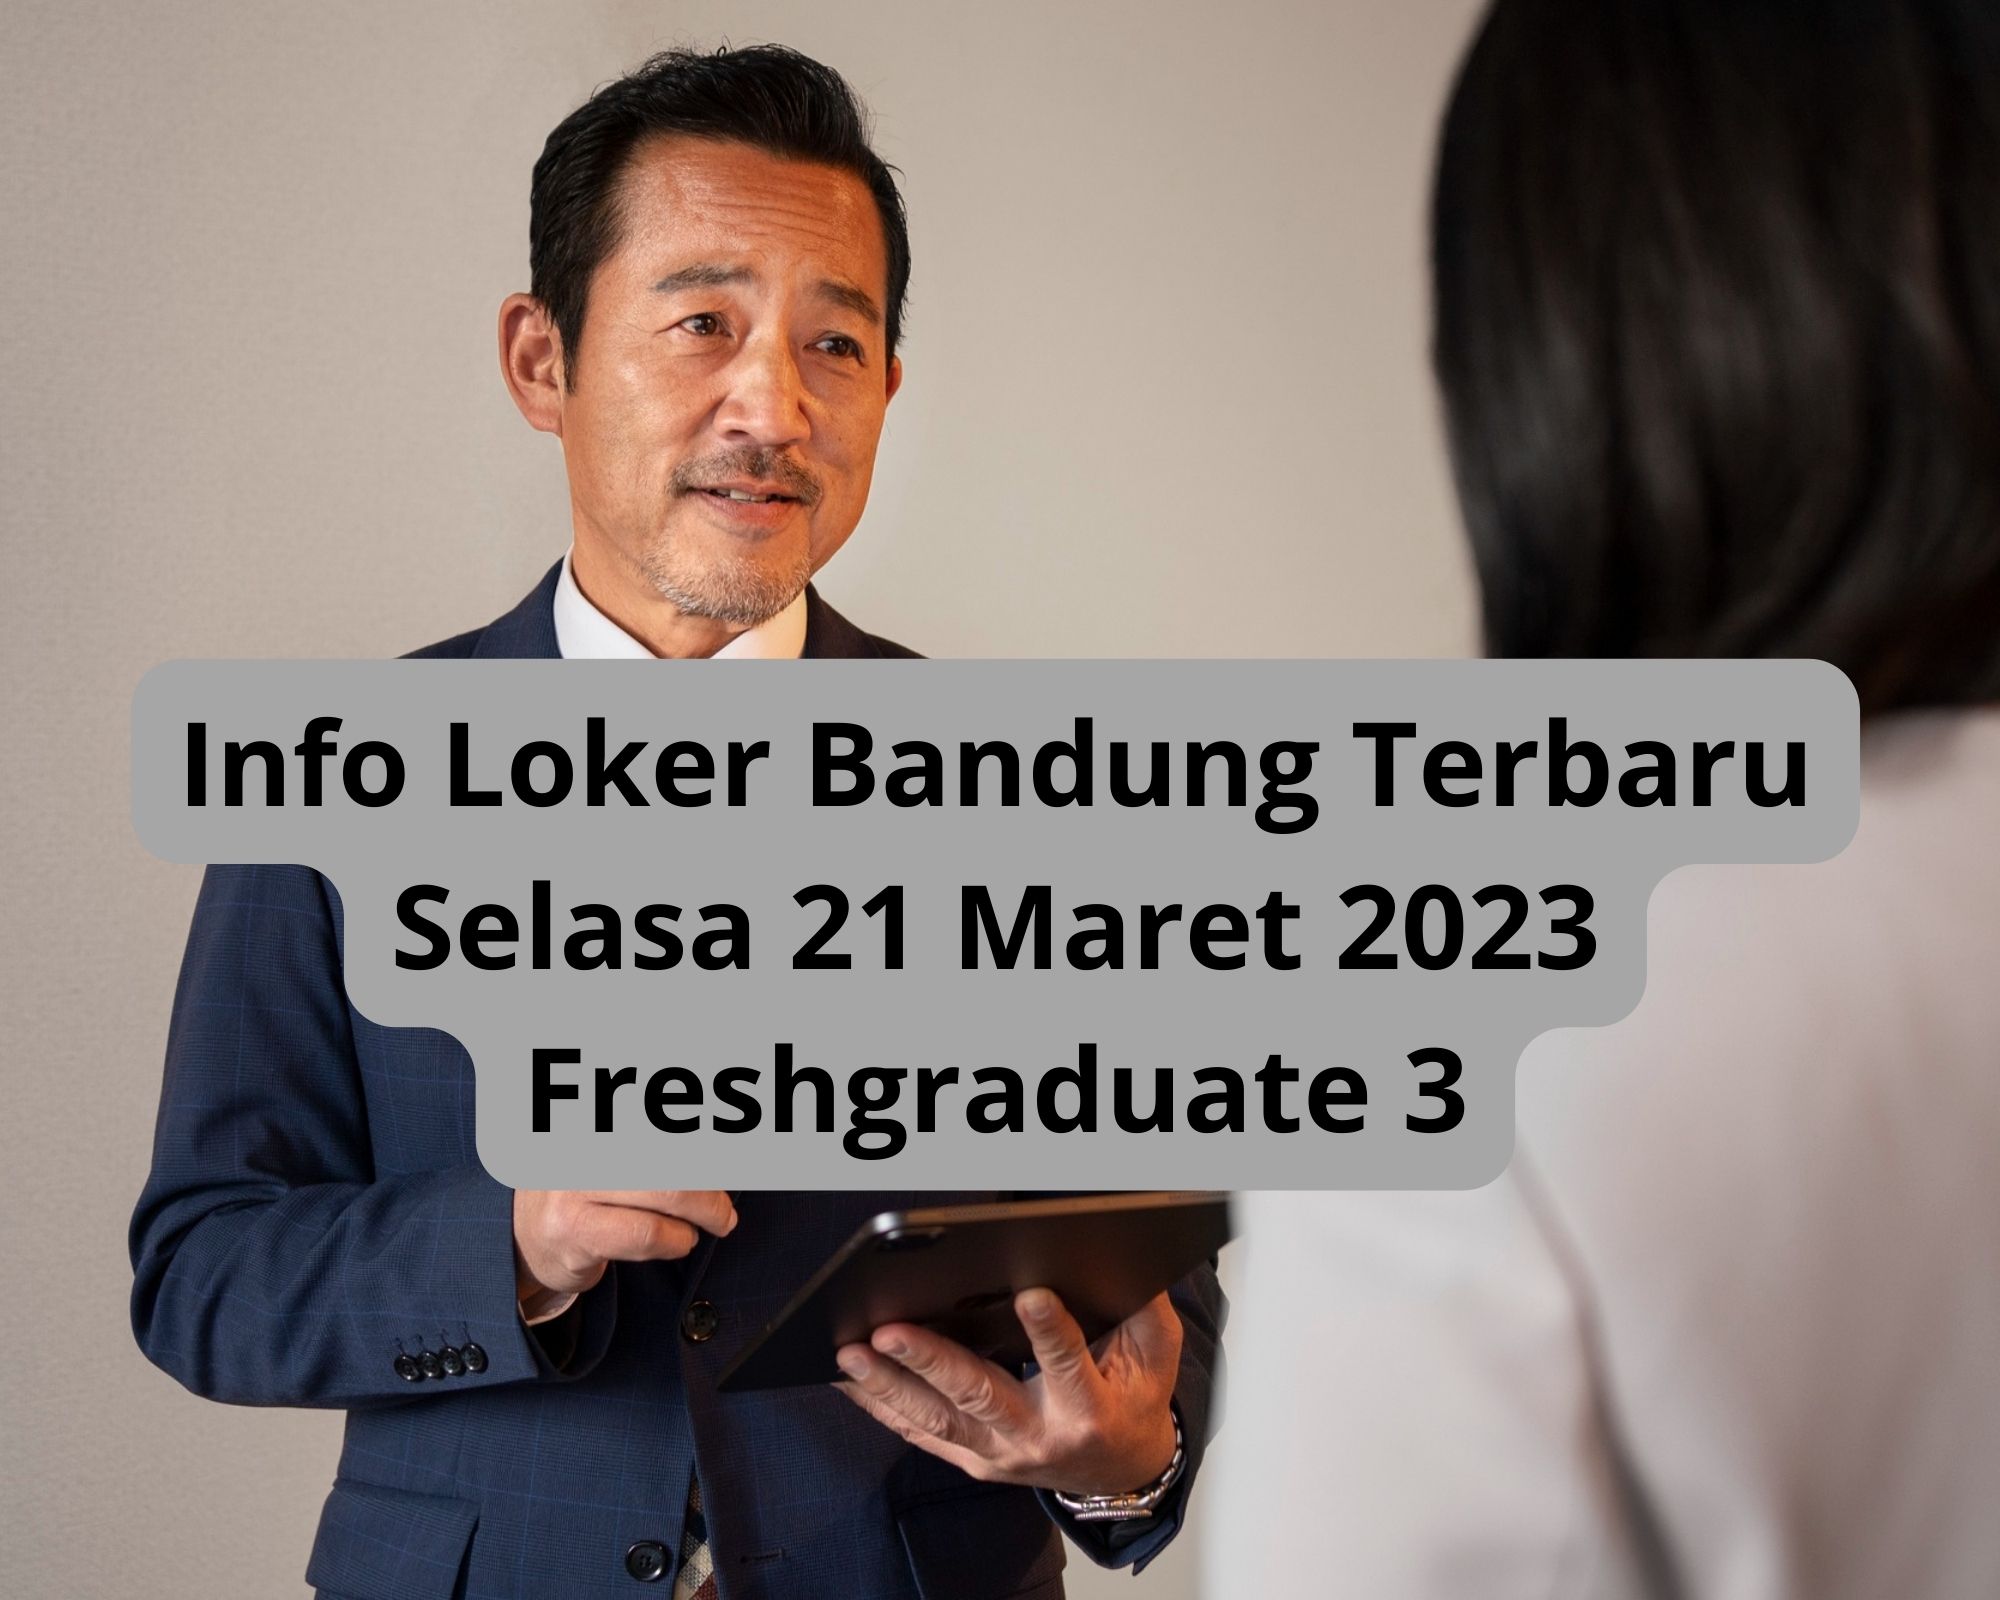 Info Loker Bandung Terbaru Selasa 21 Maret 2023 Freshgraduate 3